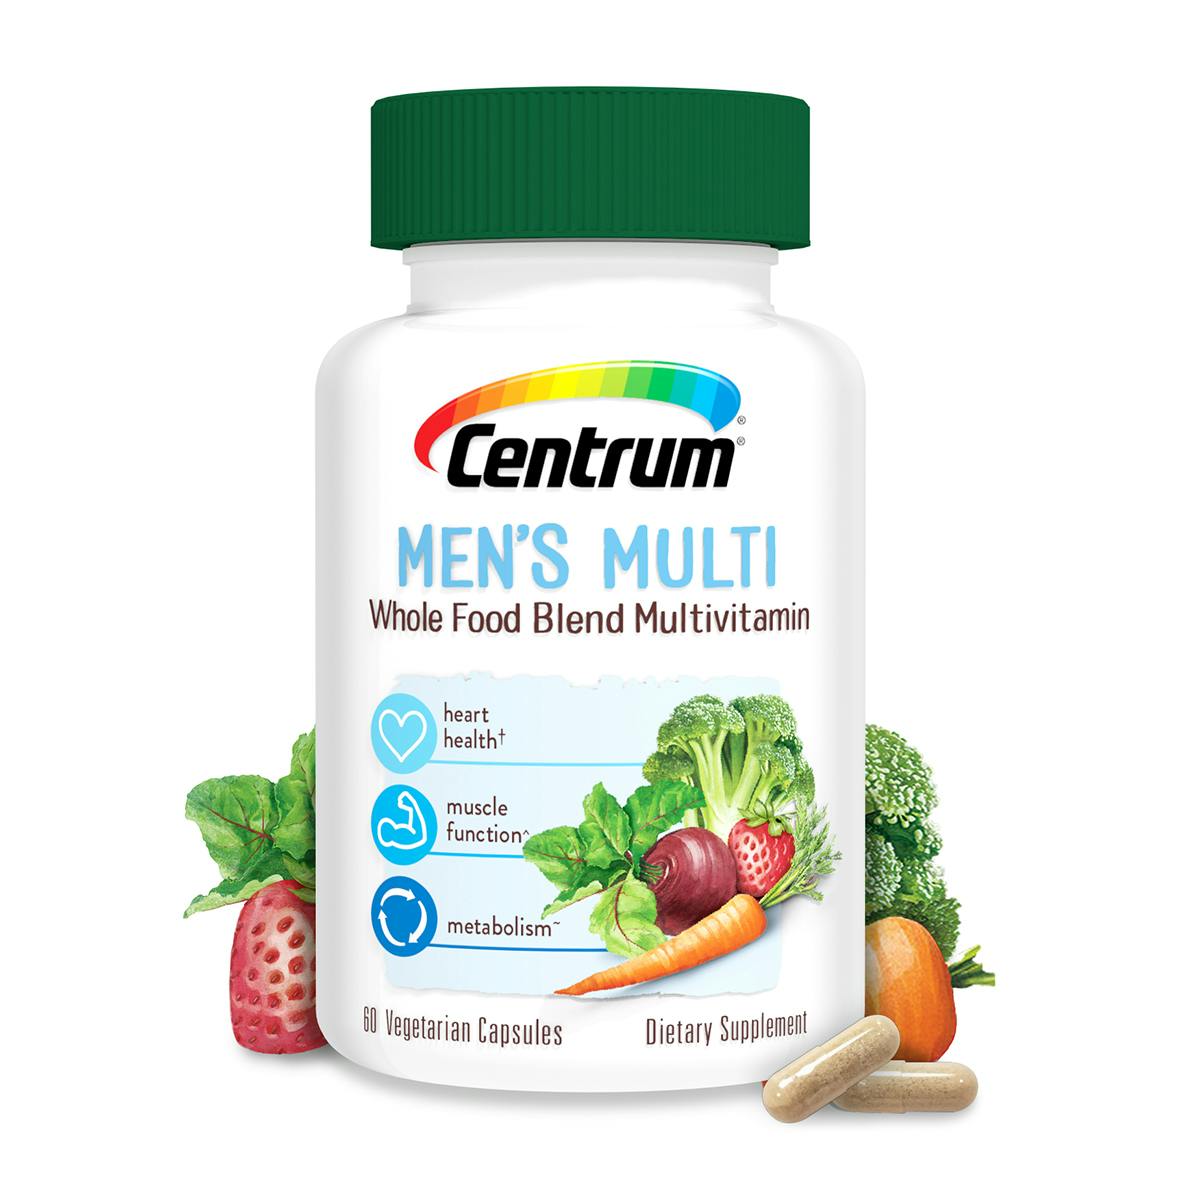 Bottle of Centrum Men’s Whole Food Blend Multivitamins